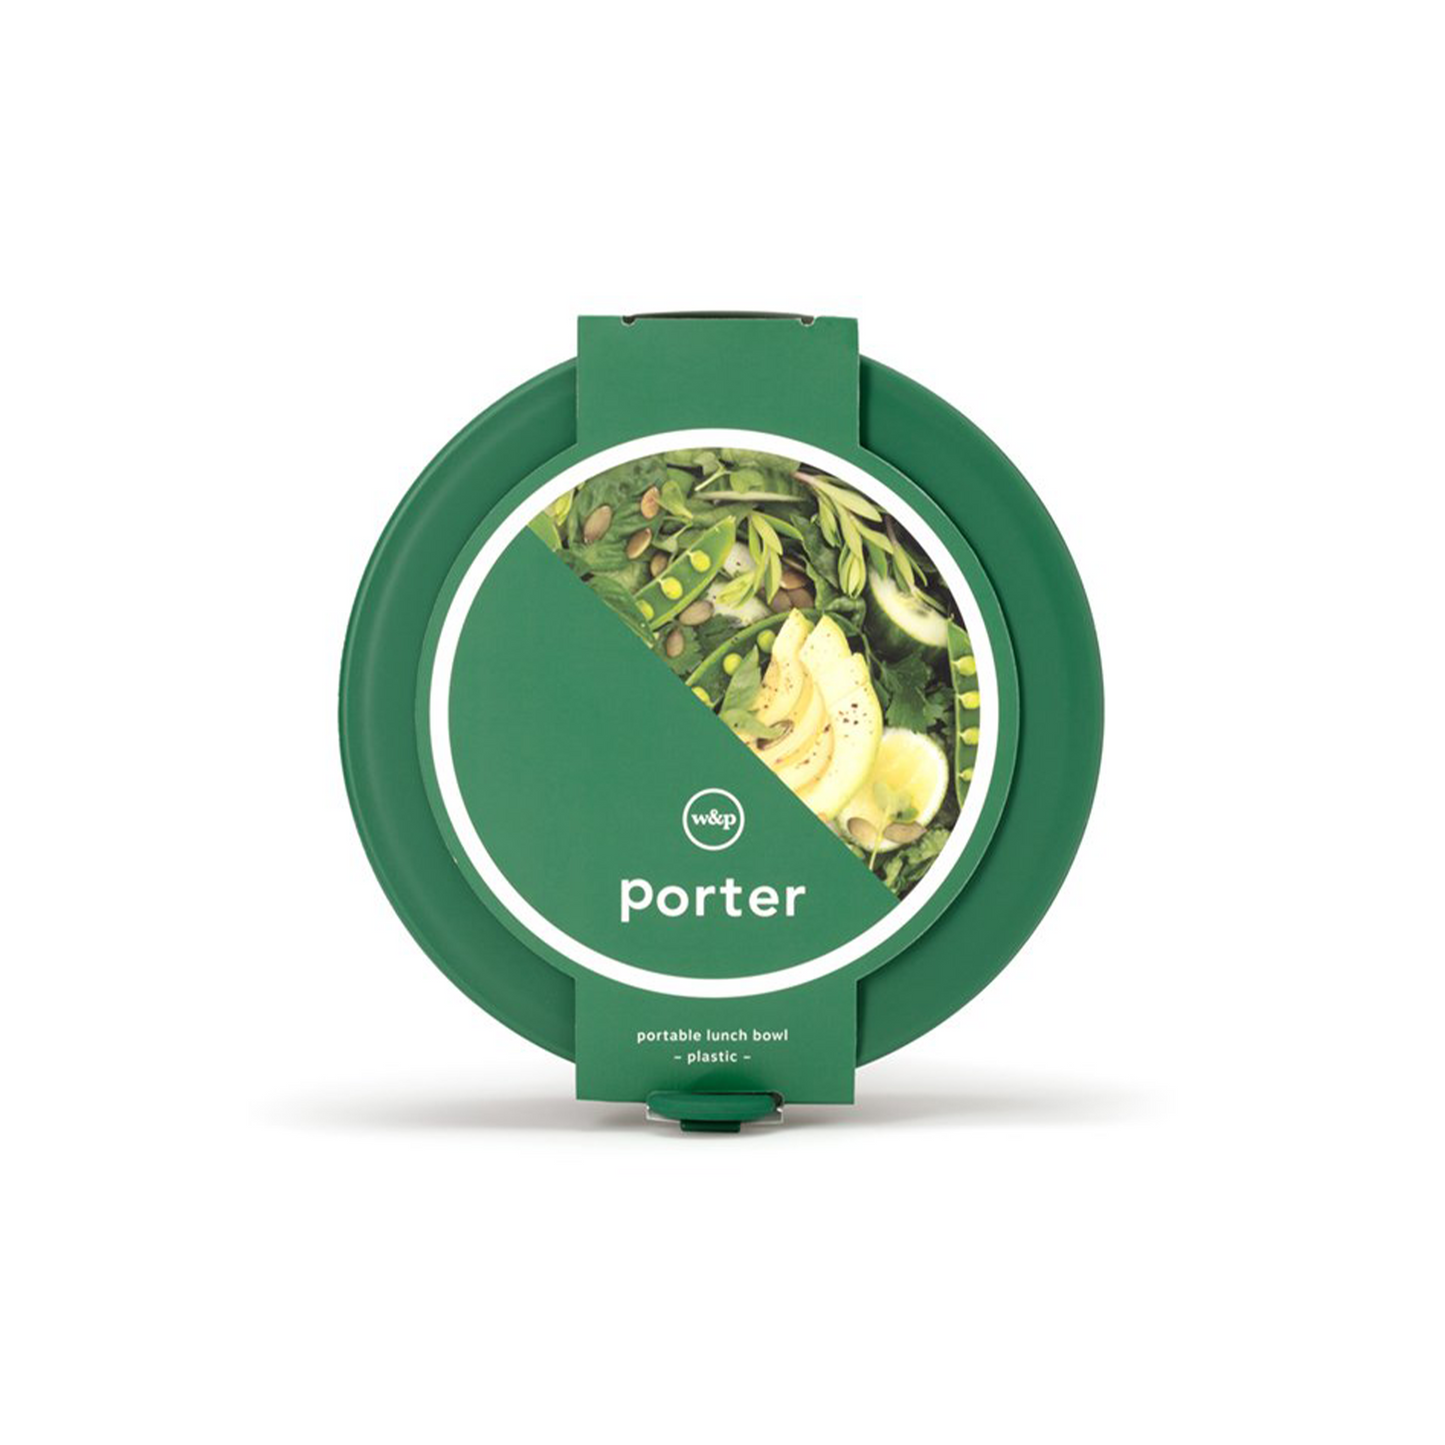 W&P Porter Plastic Portable Lunch Bowl